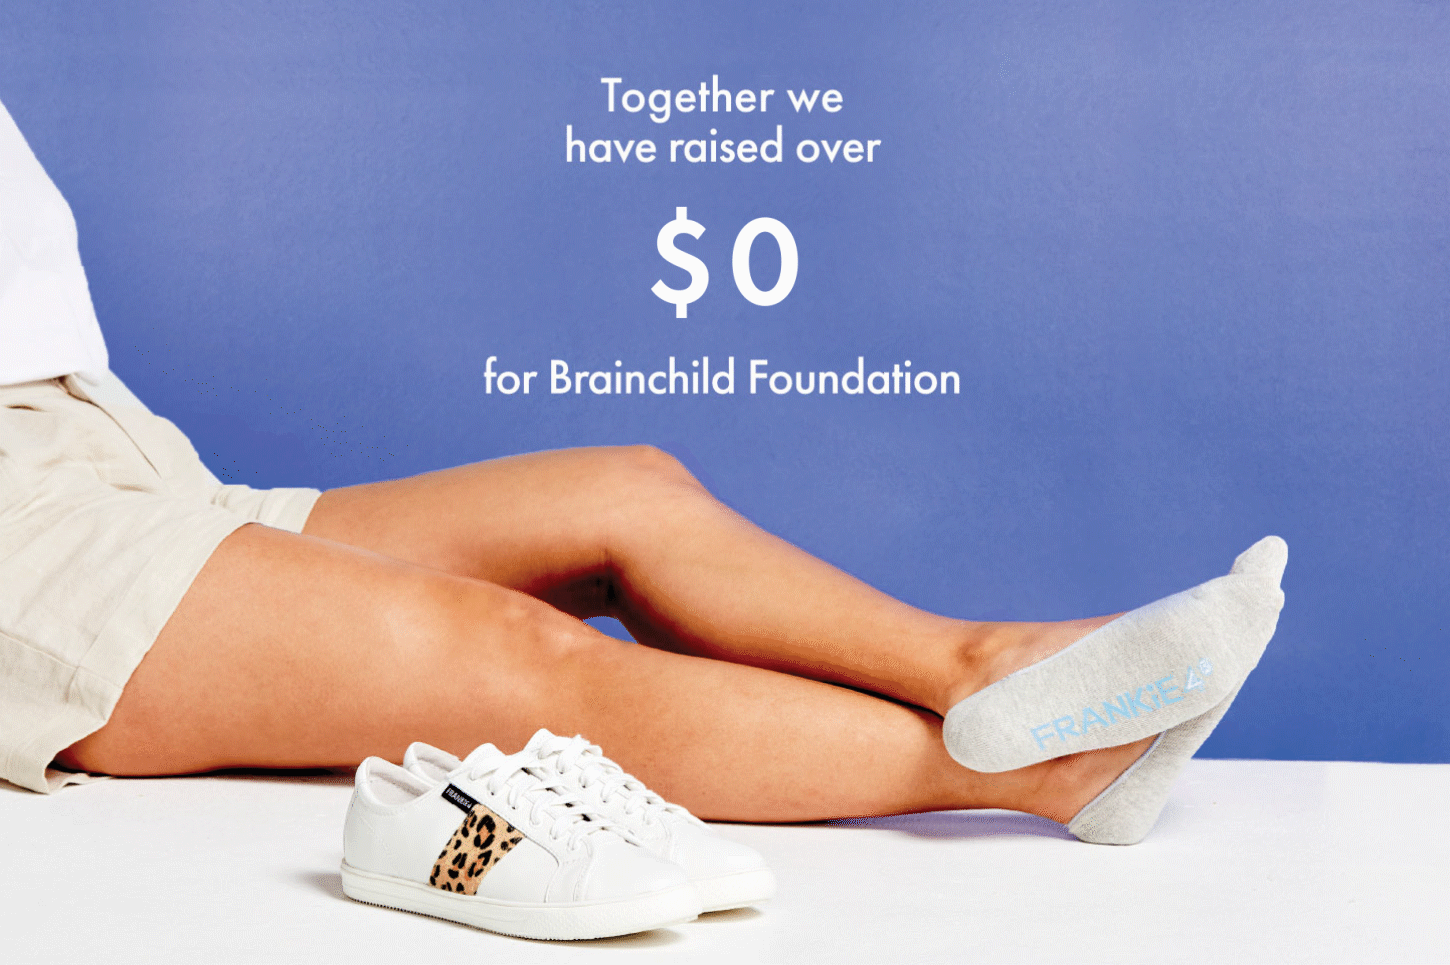 Celebrating over $200,000 raised for Brainchild Foundation